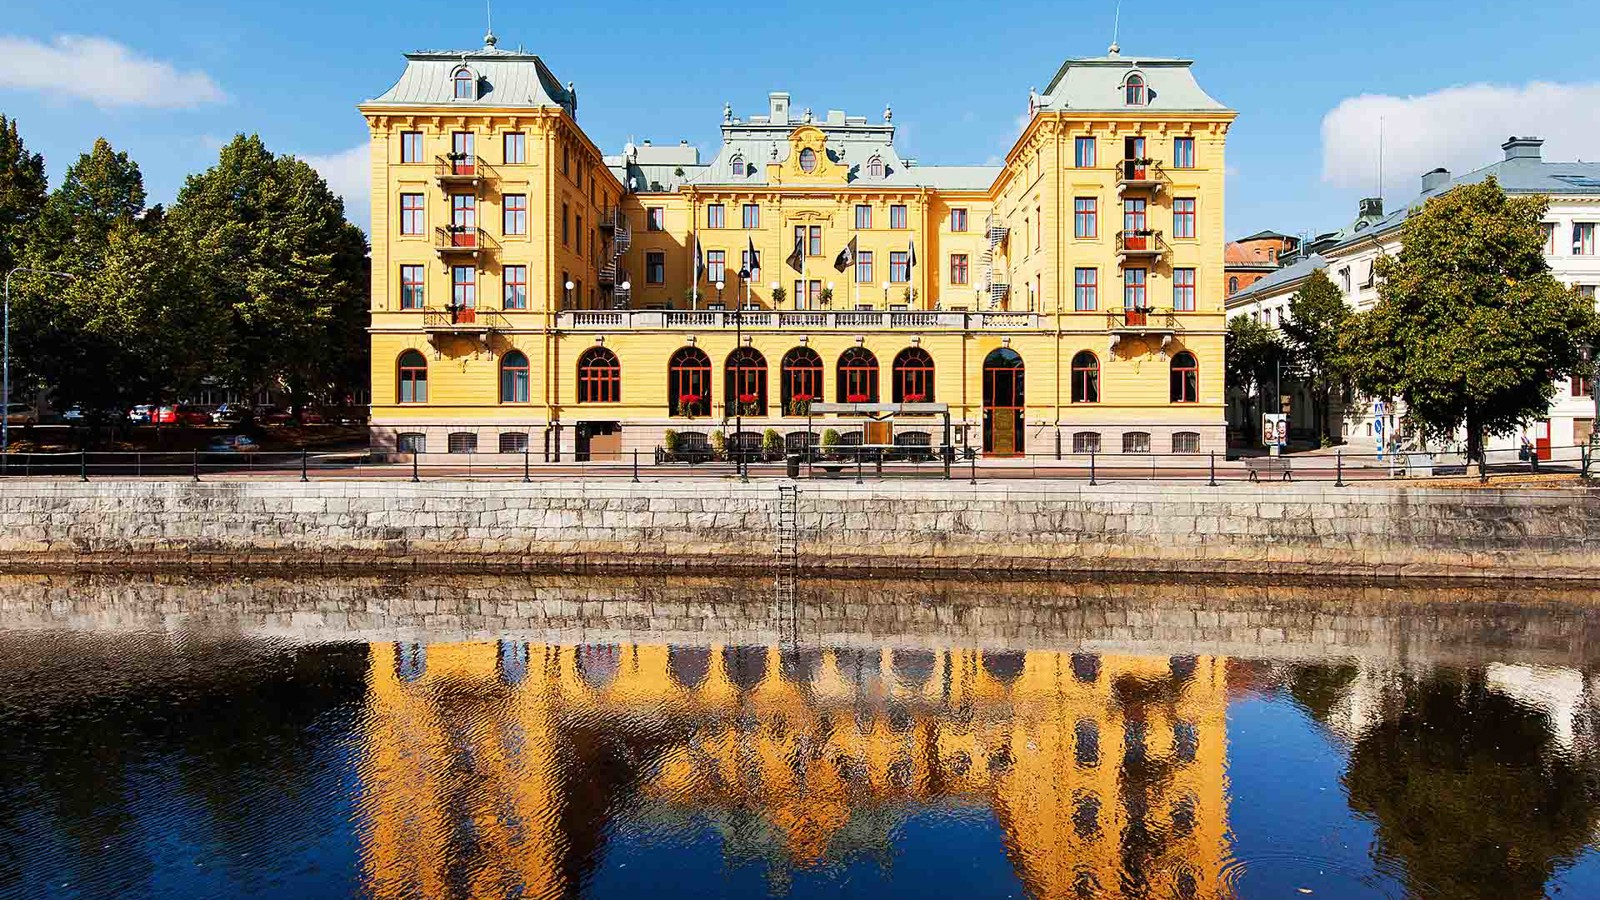 Elite Grand Hotel in Gävle's yellow facade with Gävleån flowing outside